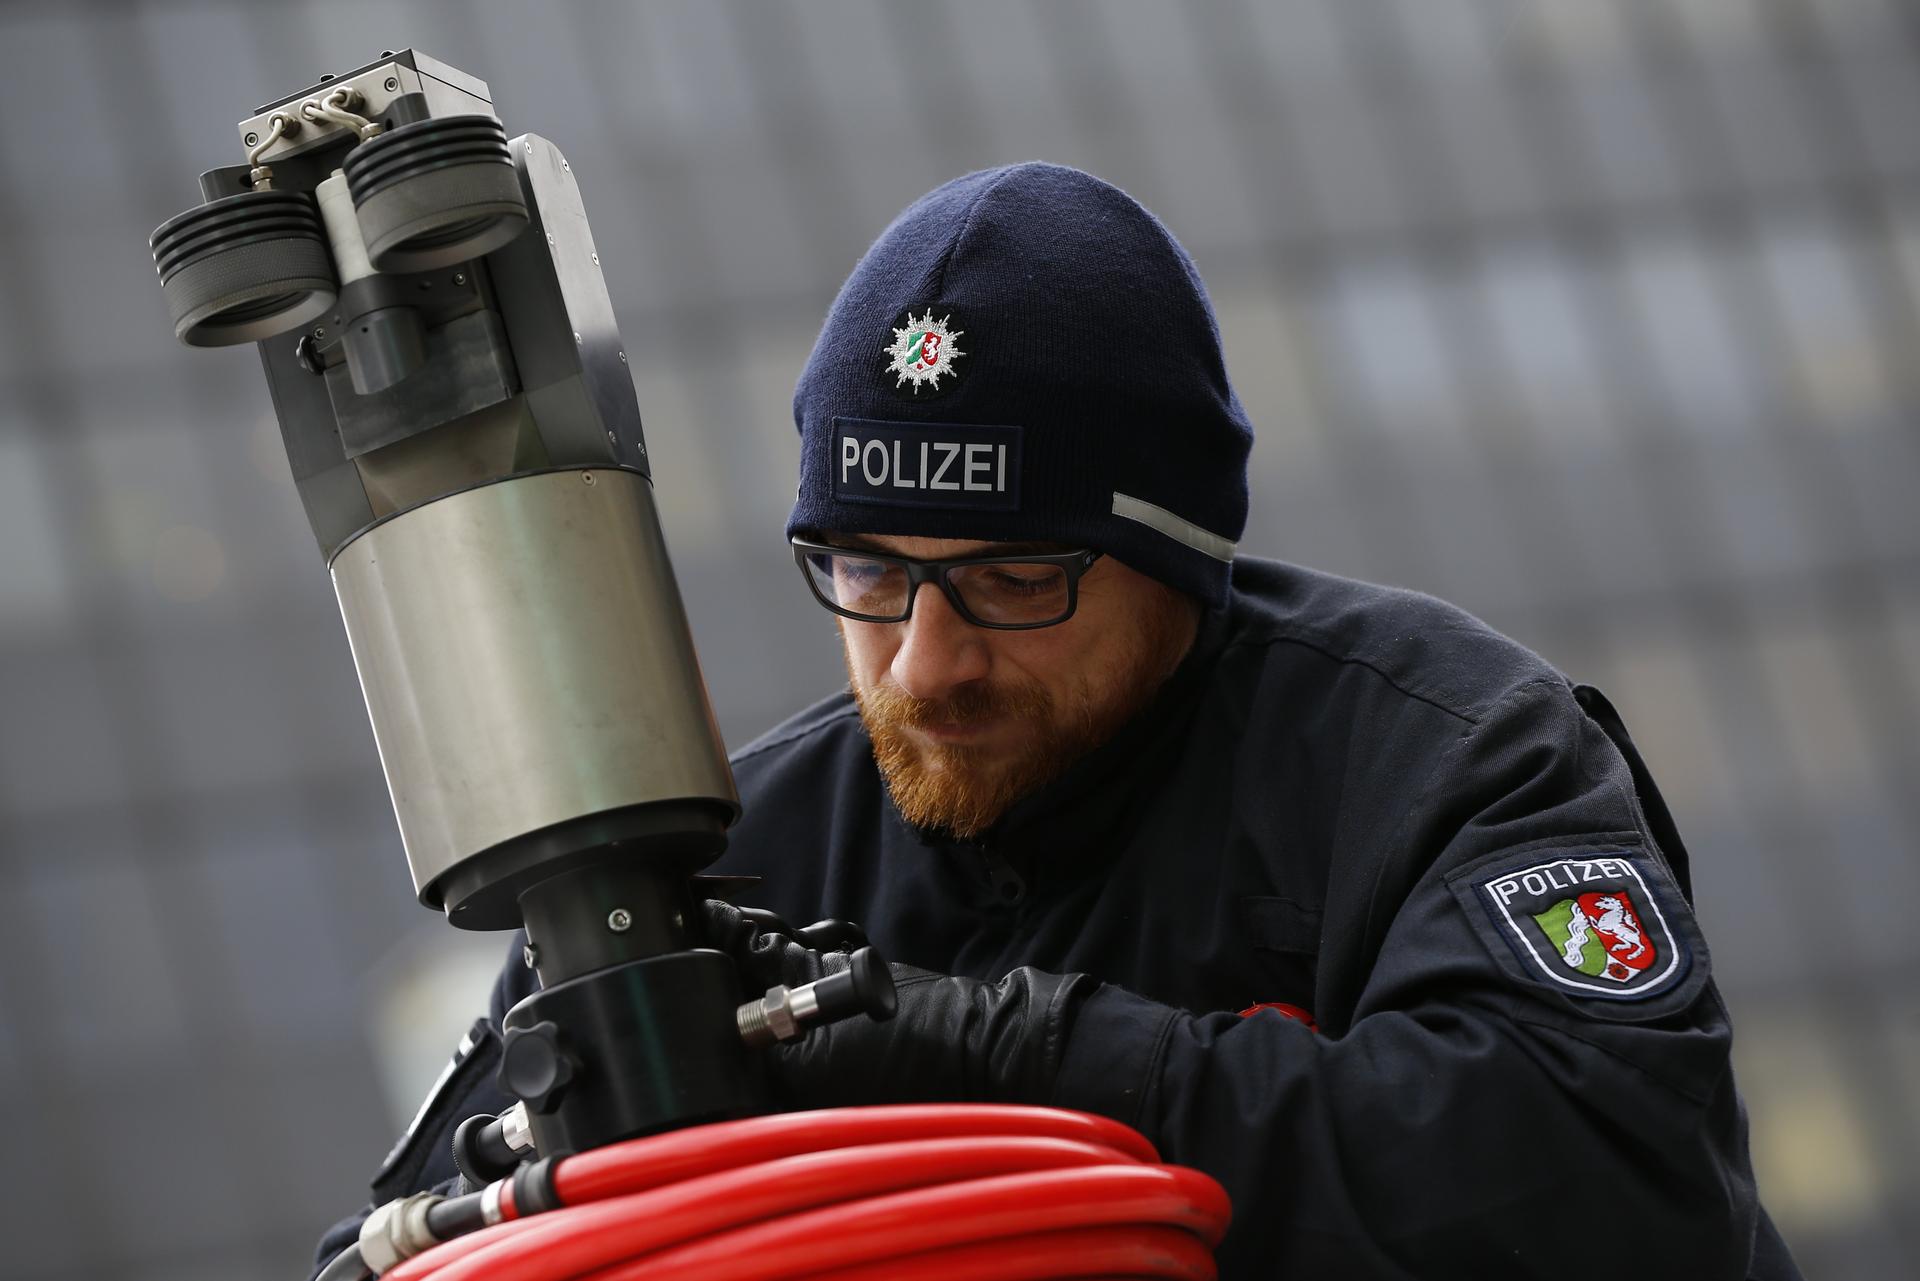 A police officer sets-up a mobile surveillance camera.